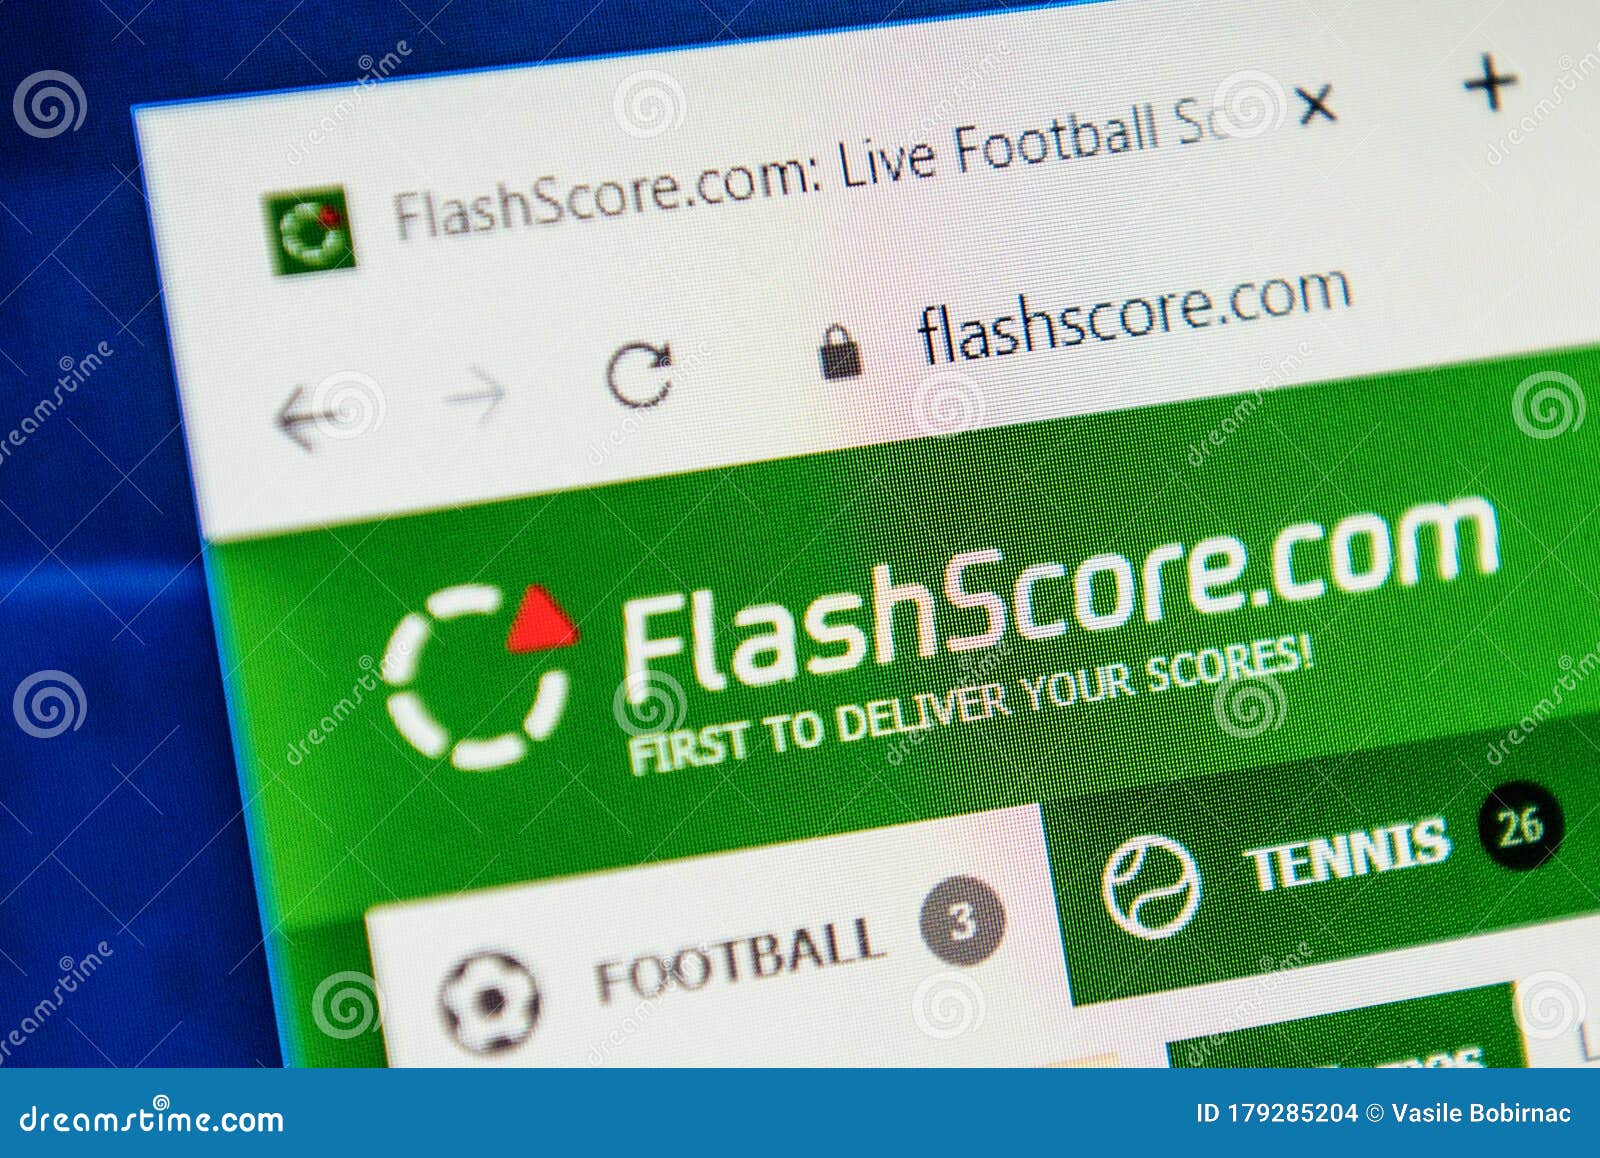 Flashscore Live Football